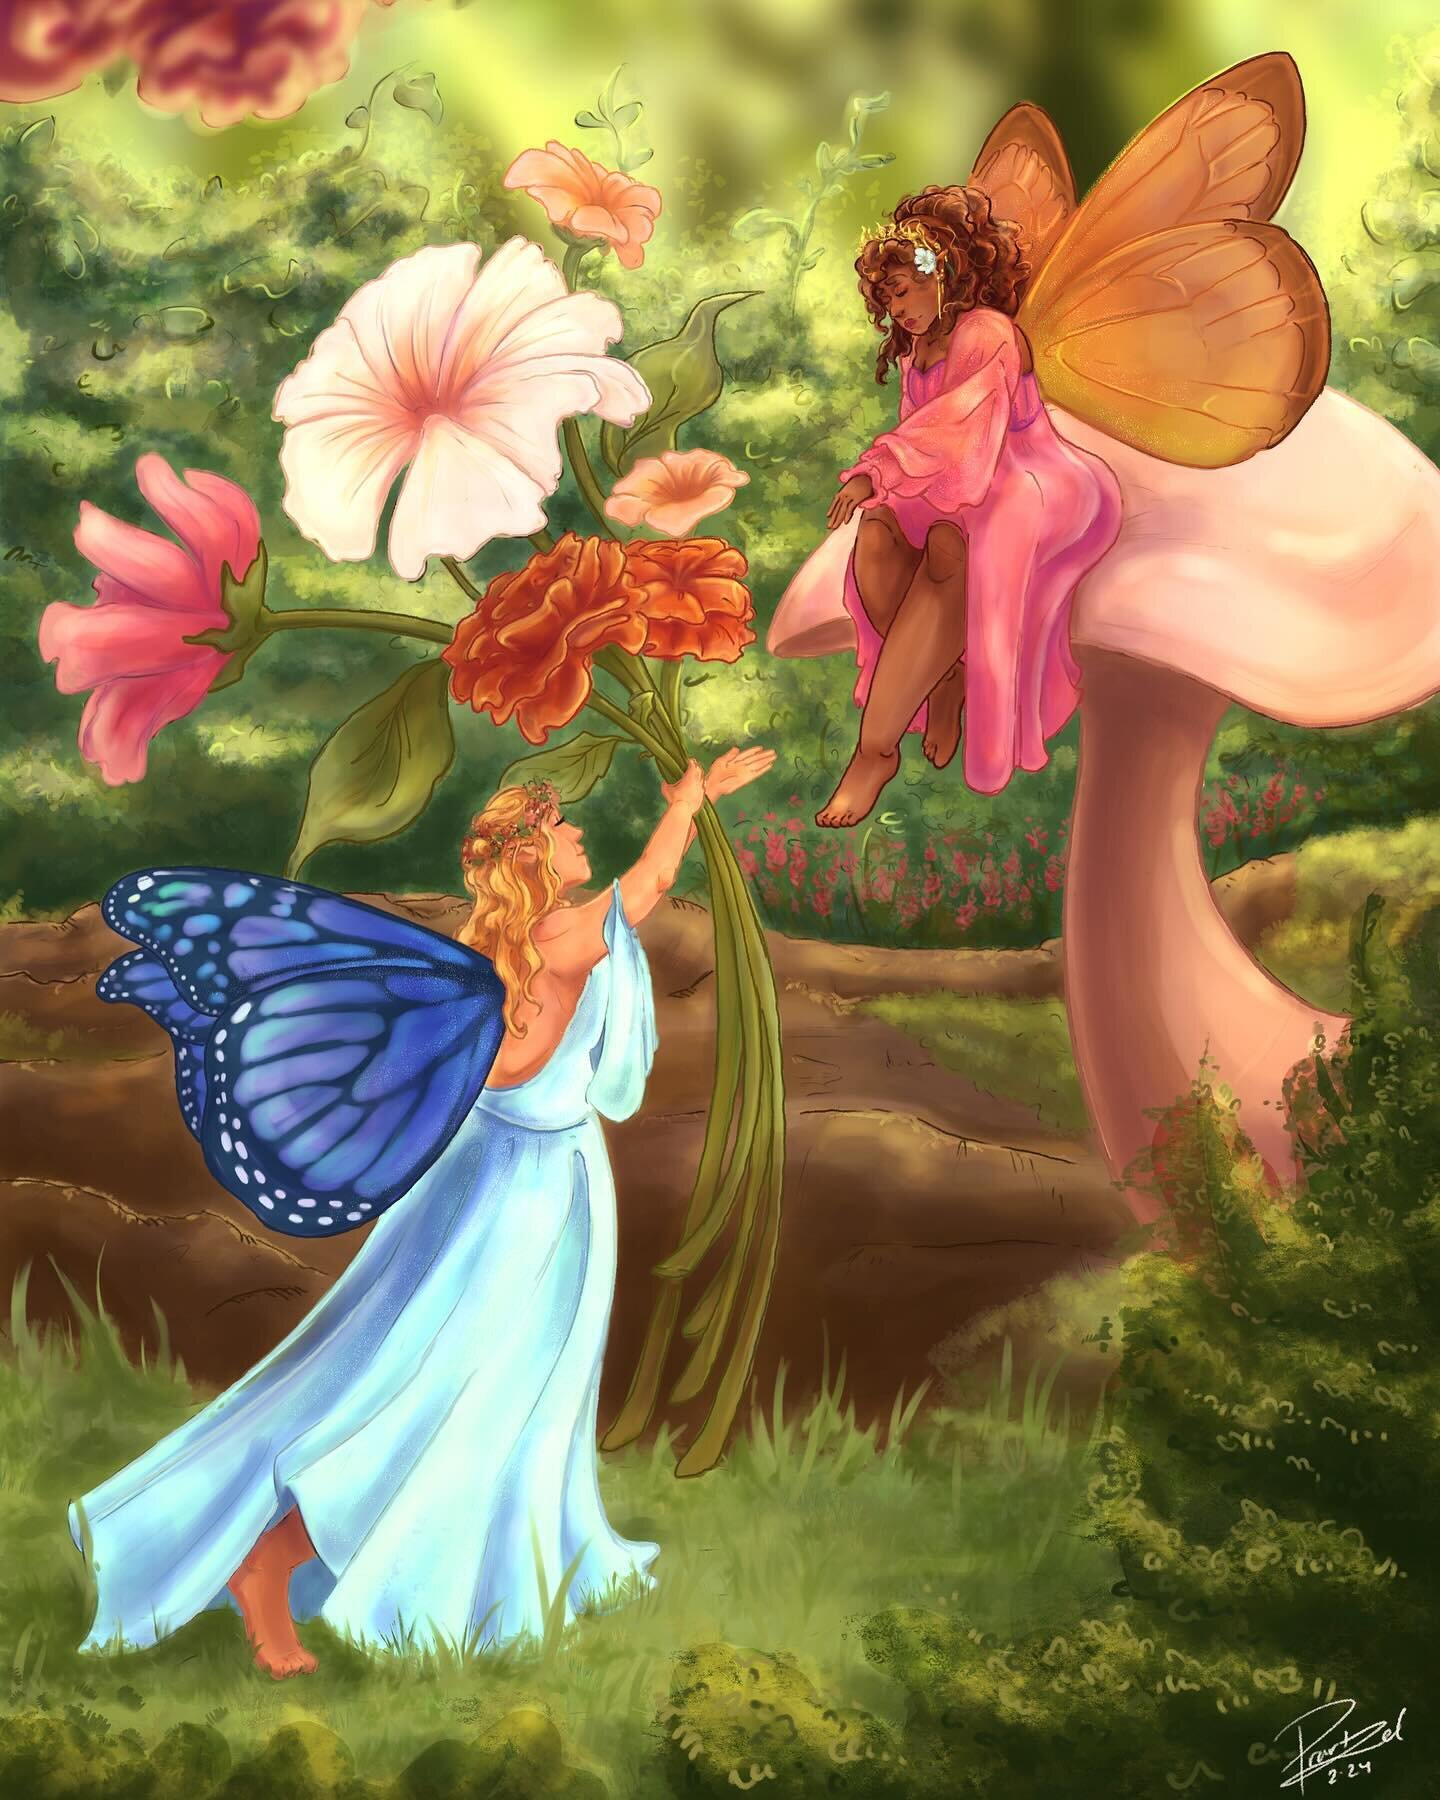 what if we were fairies and gave each other flowers 🌸💕
&bull;
&bull;
&bull;
&bull;
&bull;
&bull;
[tags]
#fairies #fairy #illustration #lgbtq #sapphic #sapphicart #fantasy #art #artistsoninstagram #digitalartist #dogitalart